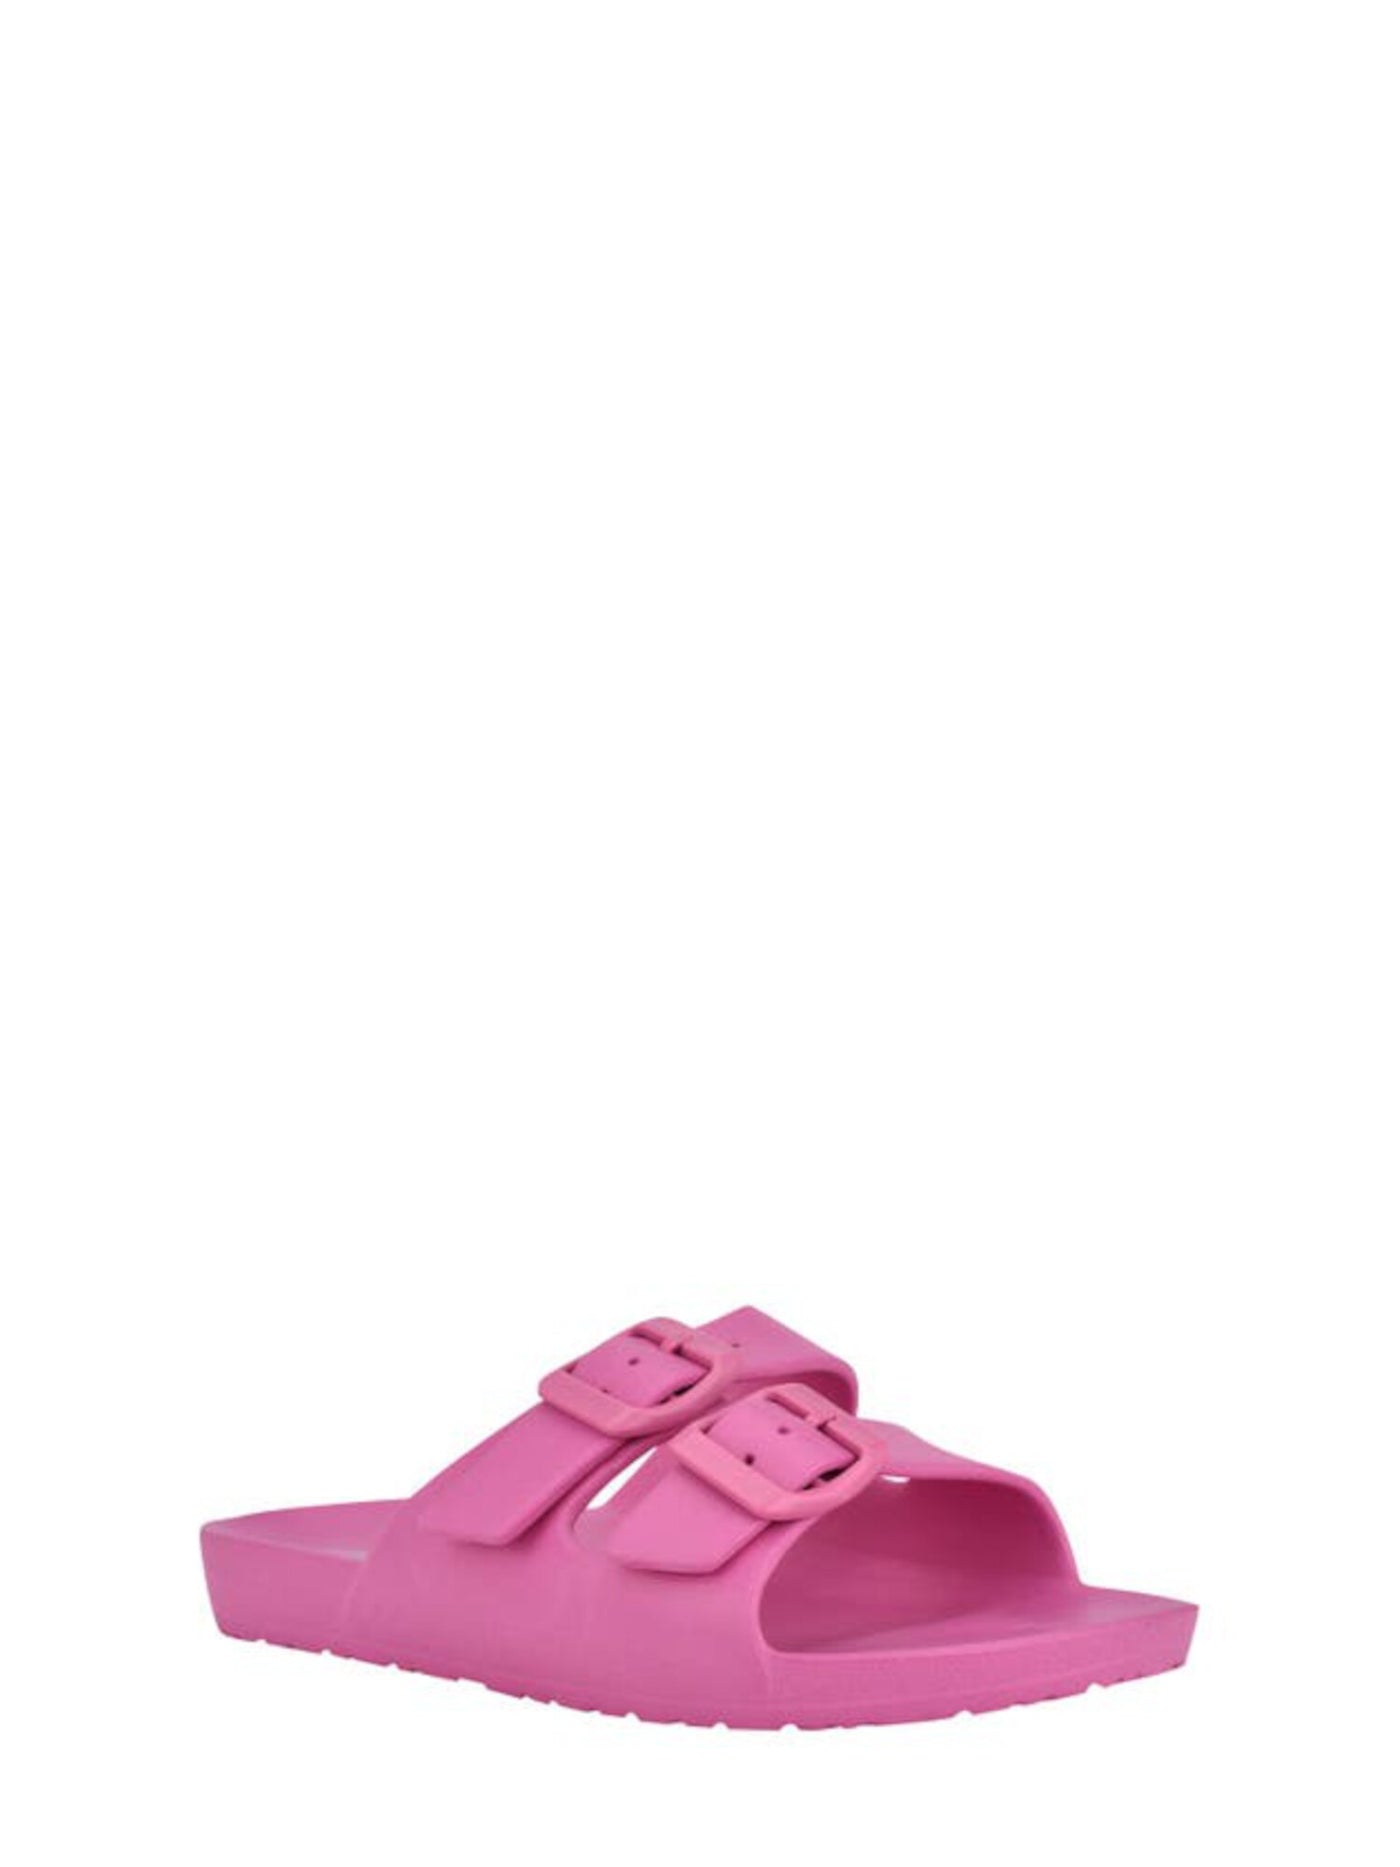 NINE WEST Womens Pink Buckle Accent Water Resistant Splash Round Toe Wedge Slip On Slide Sandals Shoes 9 M